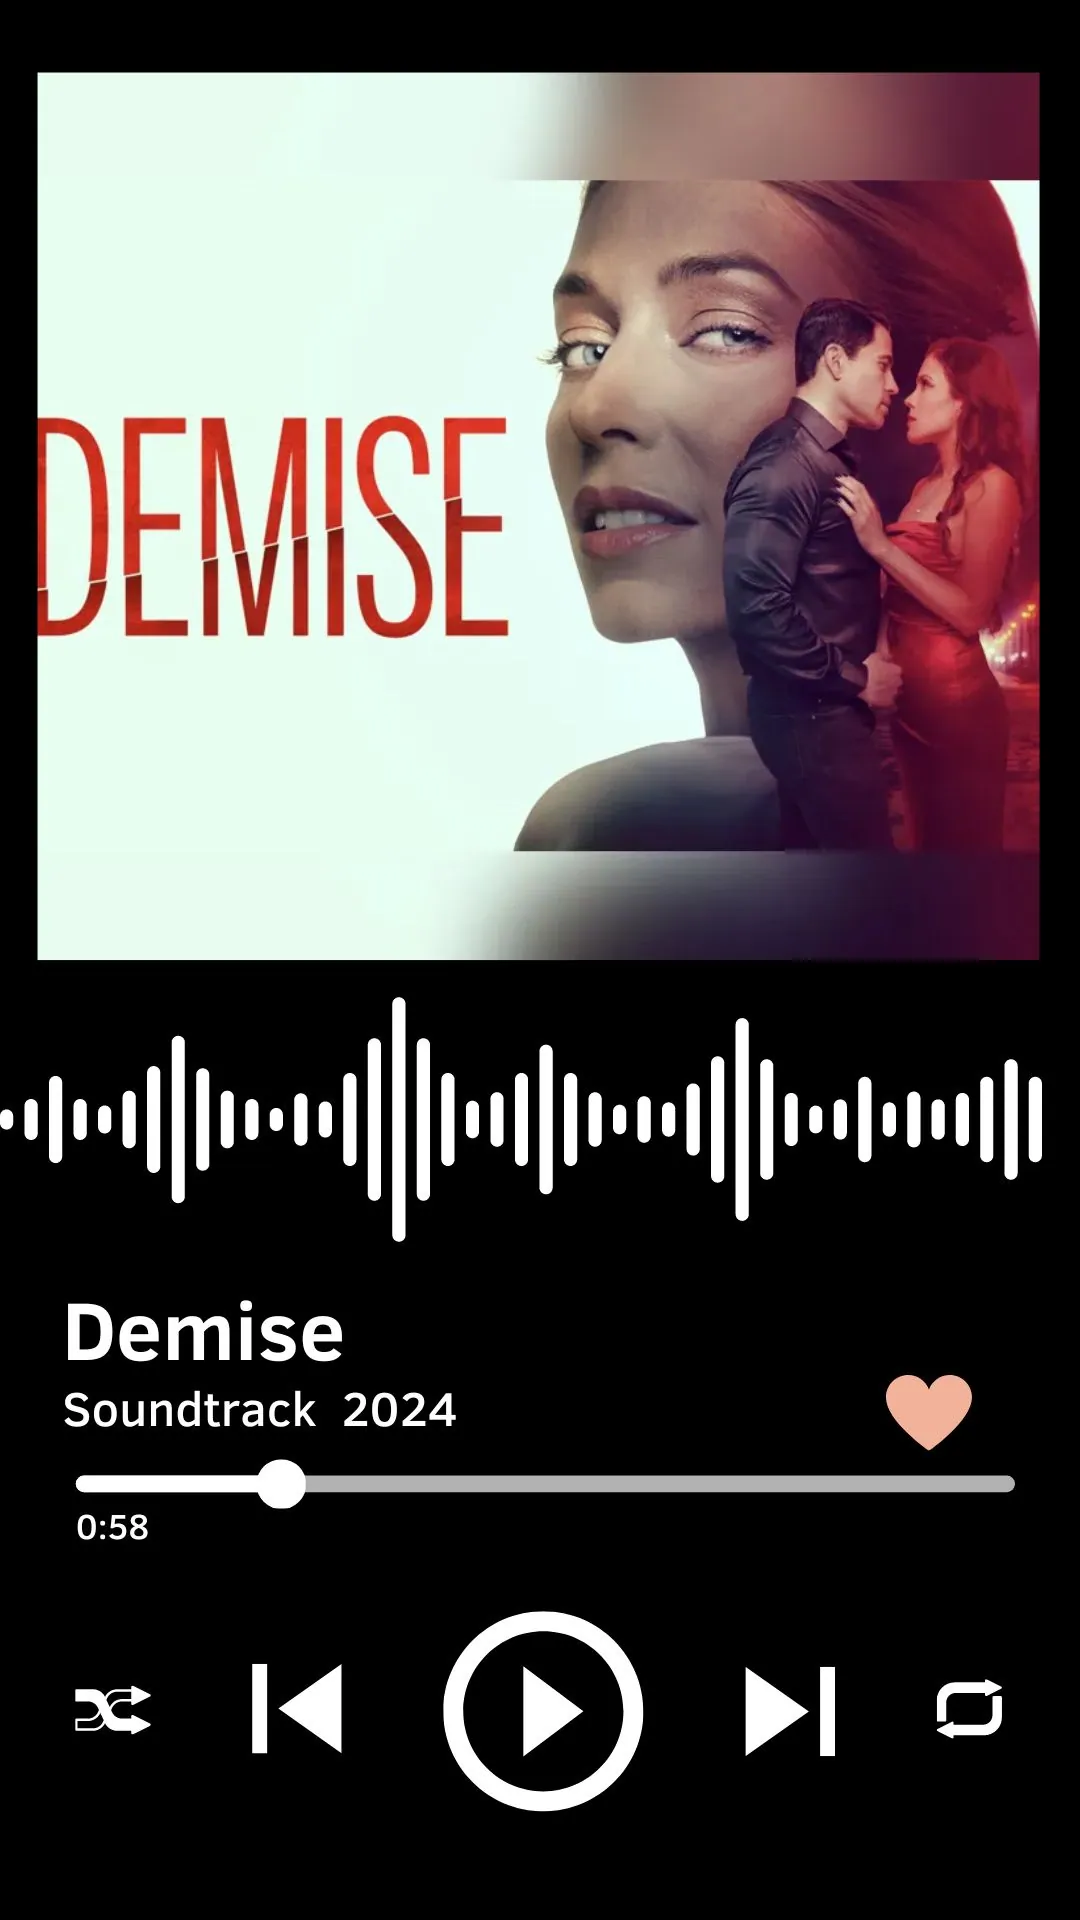 Demise Soundtrack 2024 (1) (1)